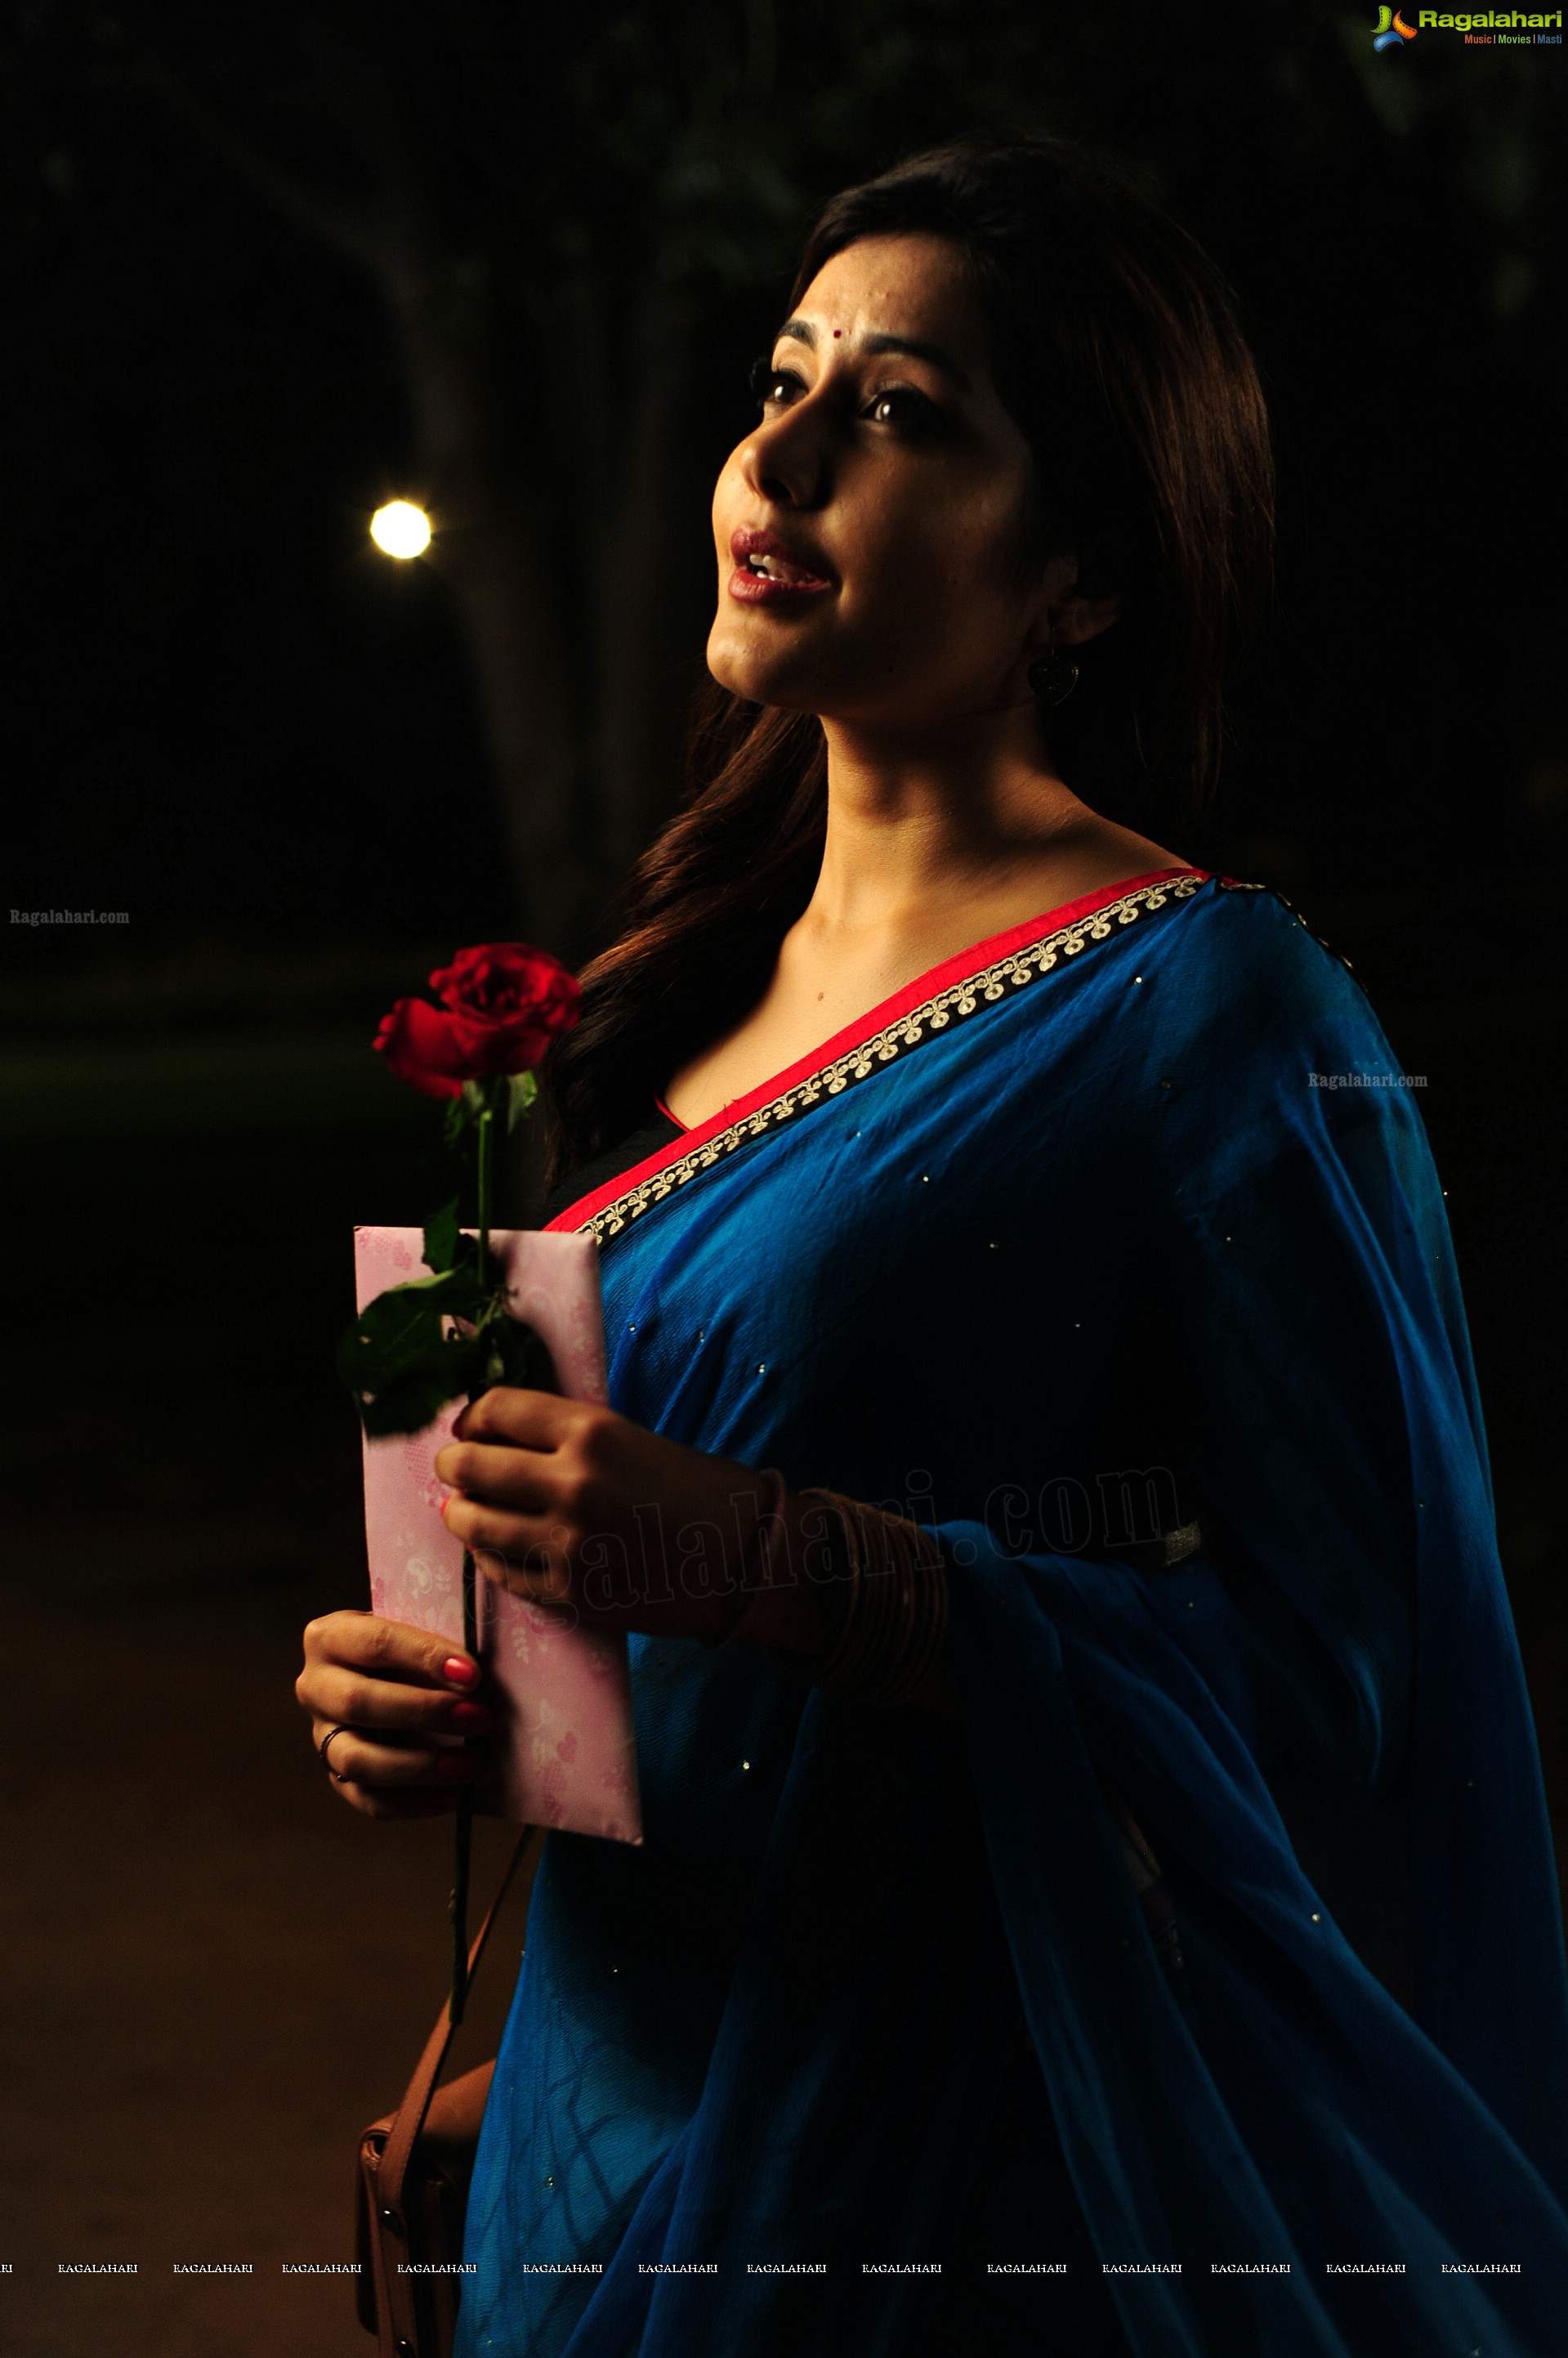 HD Photos: Gorgeous Rashi Khanna in Saree